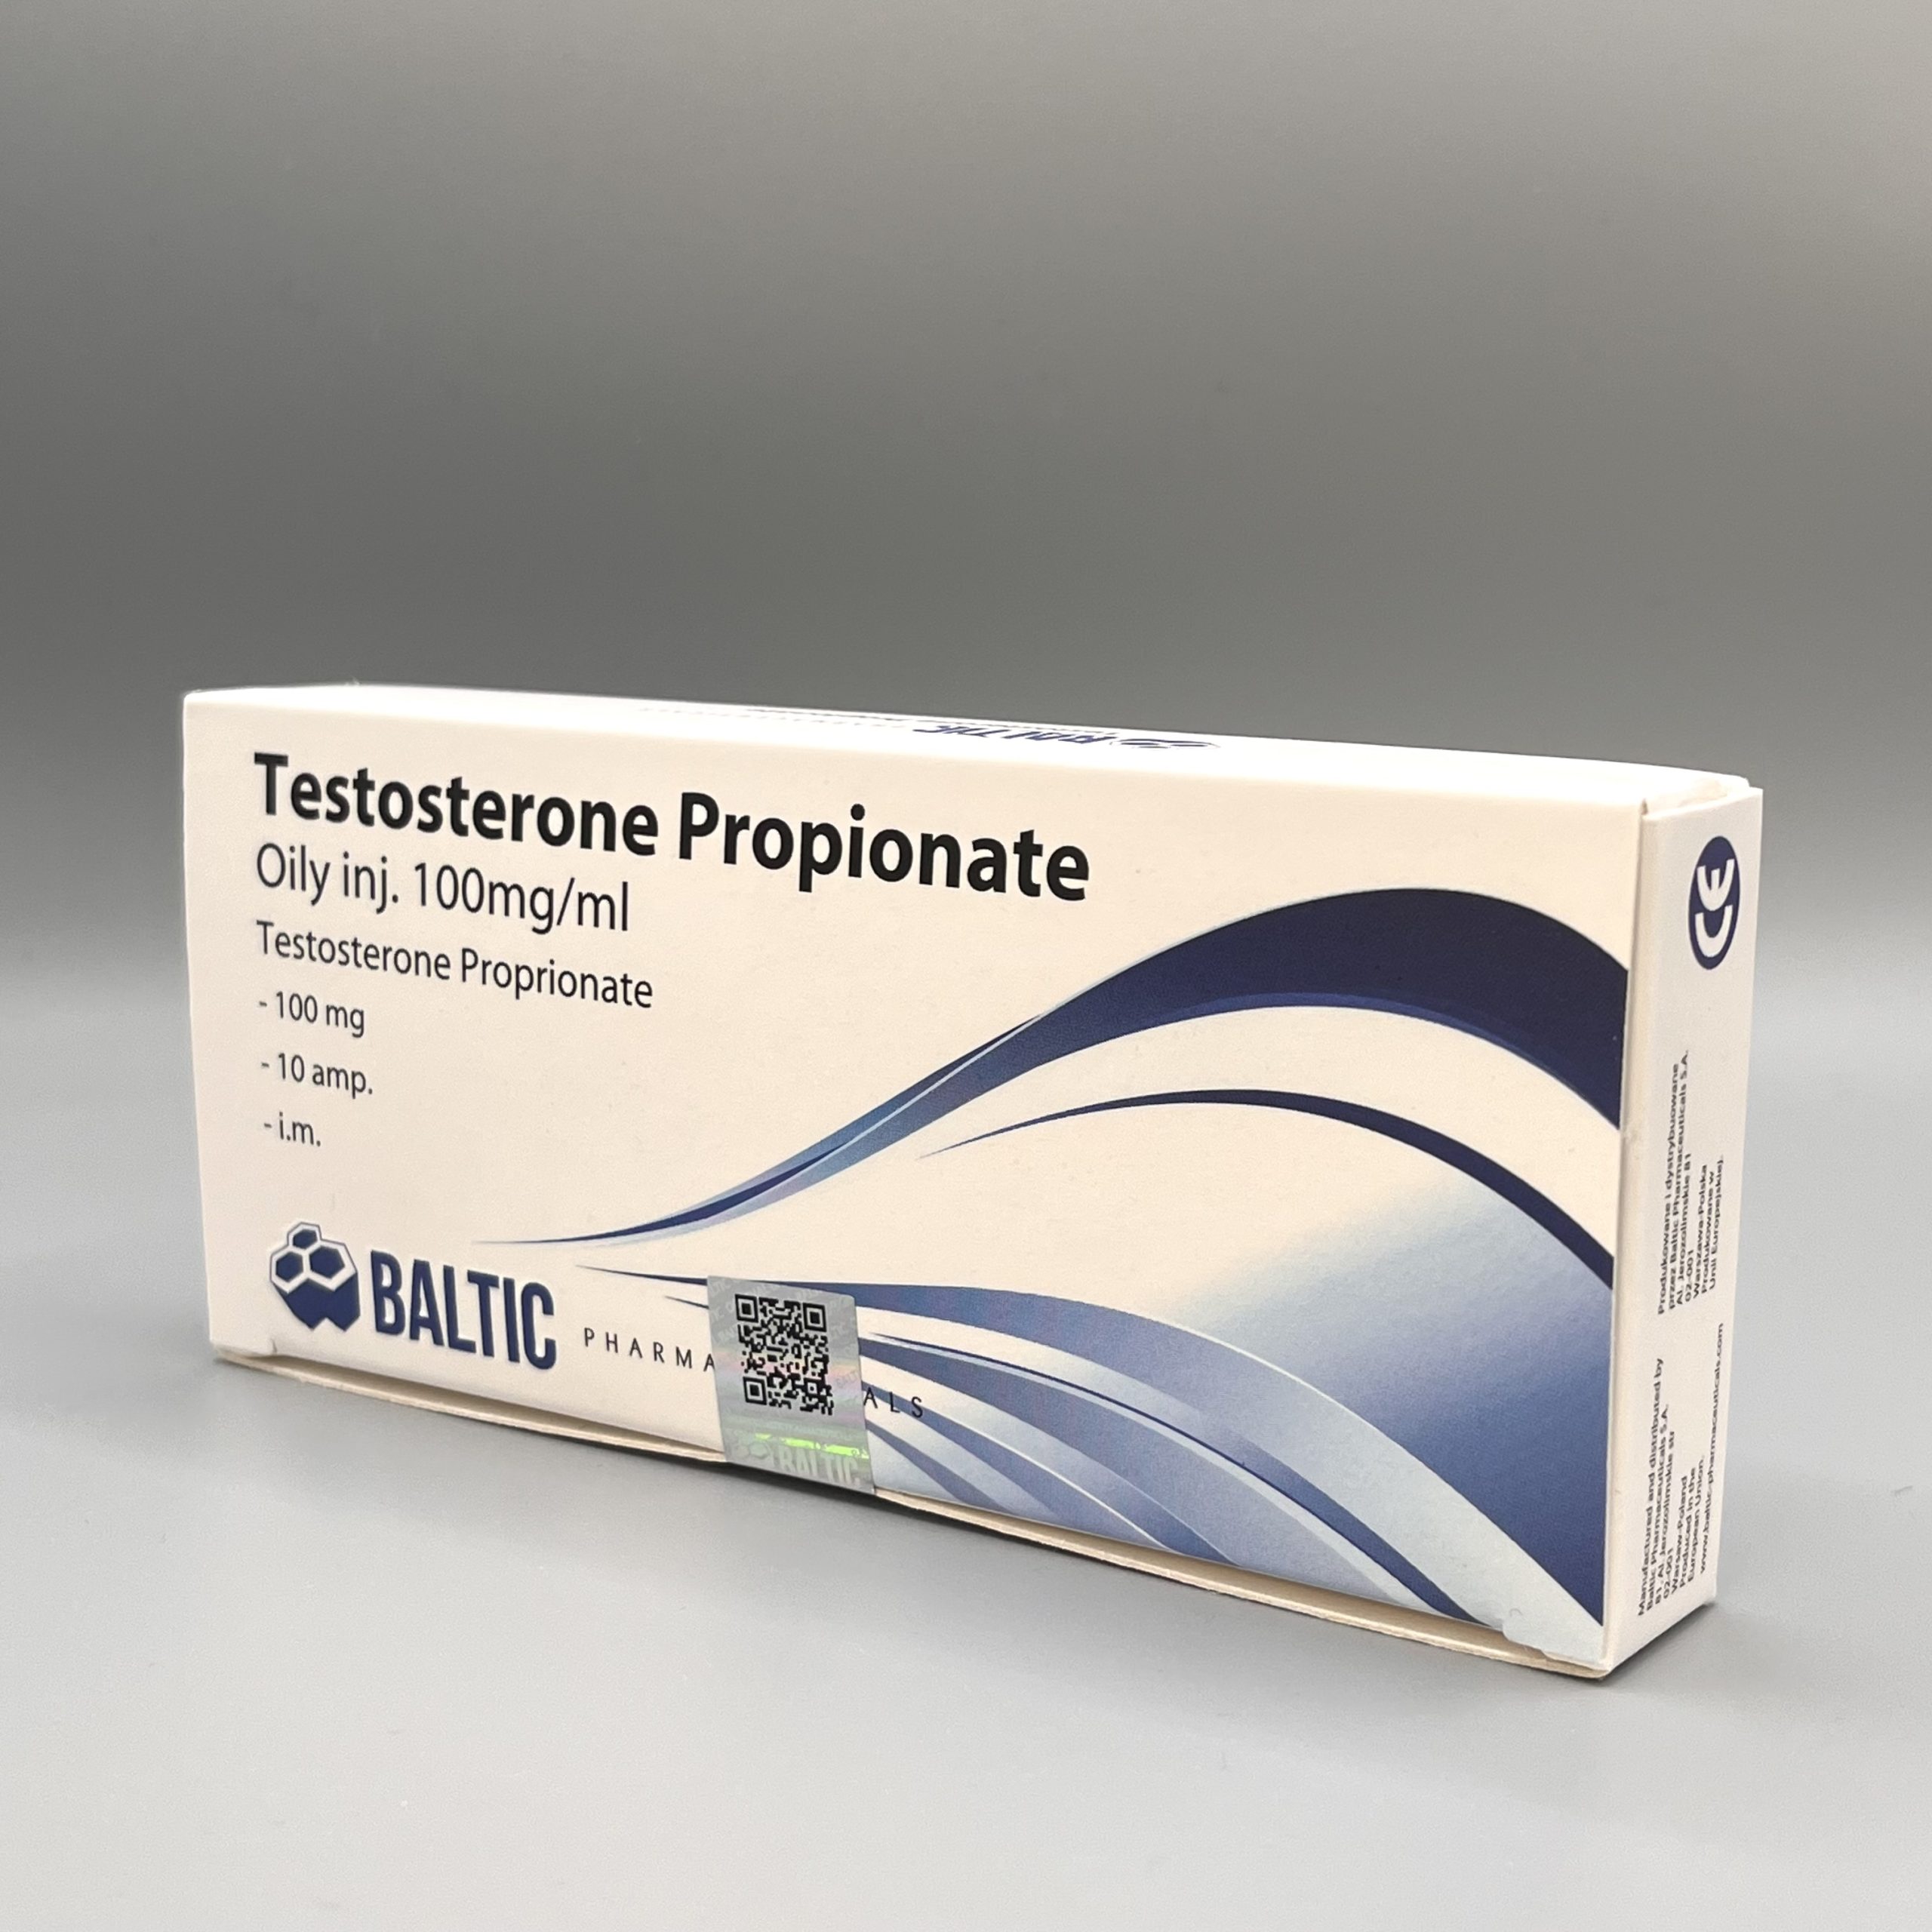 Testosterone Propionate 100mg:ml